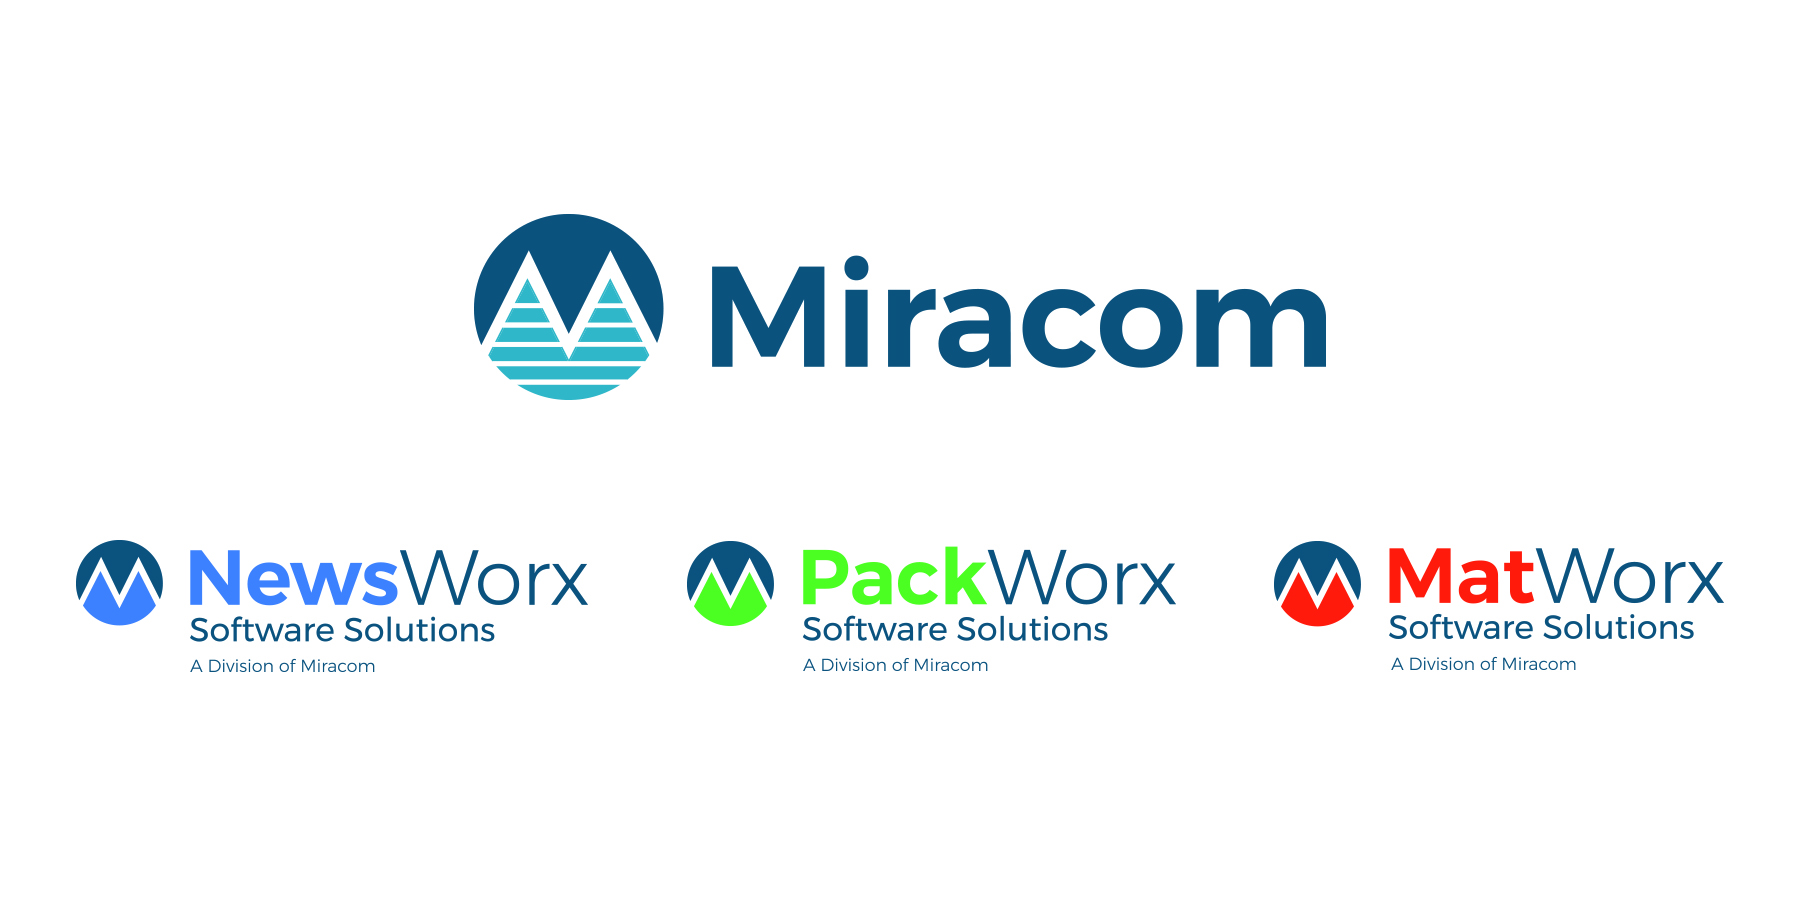 Miracom_PackWorx logos